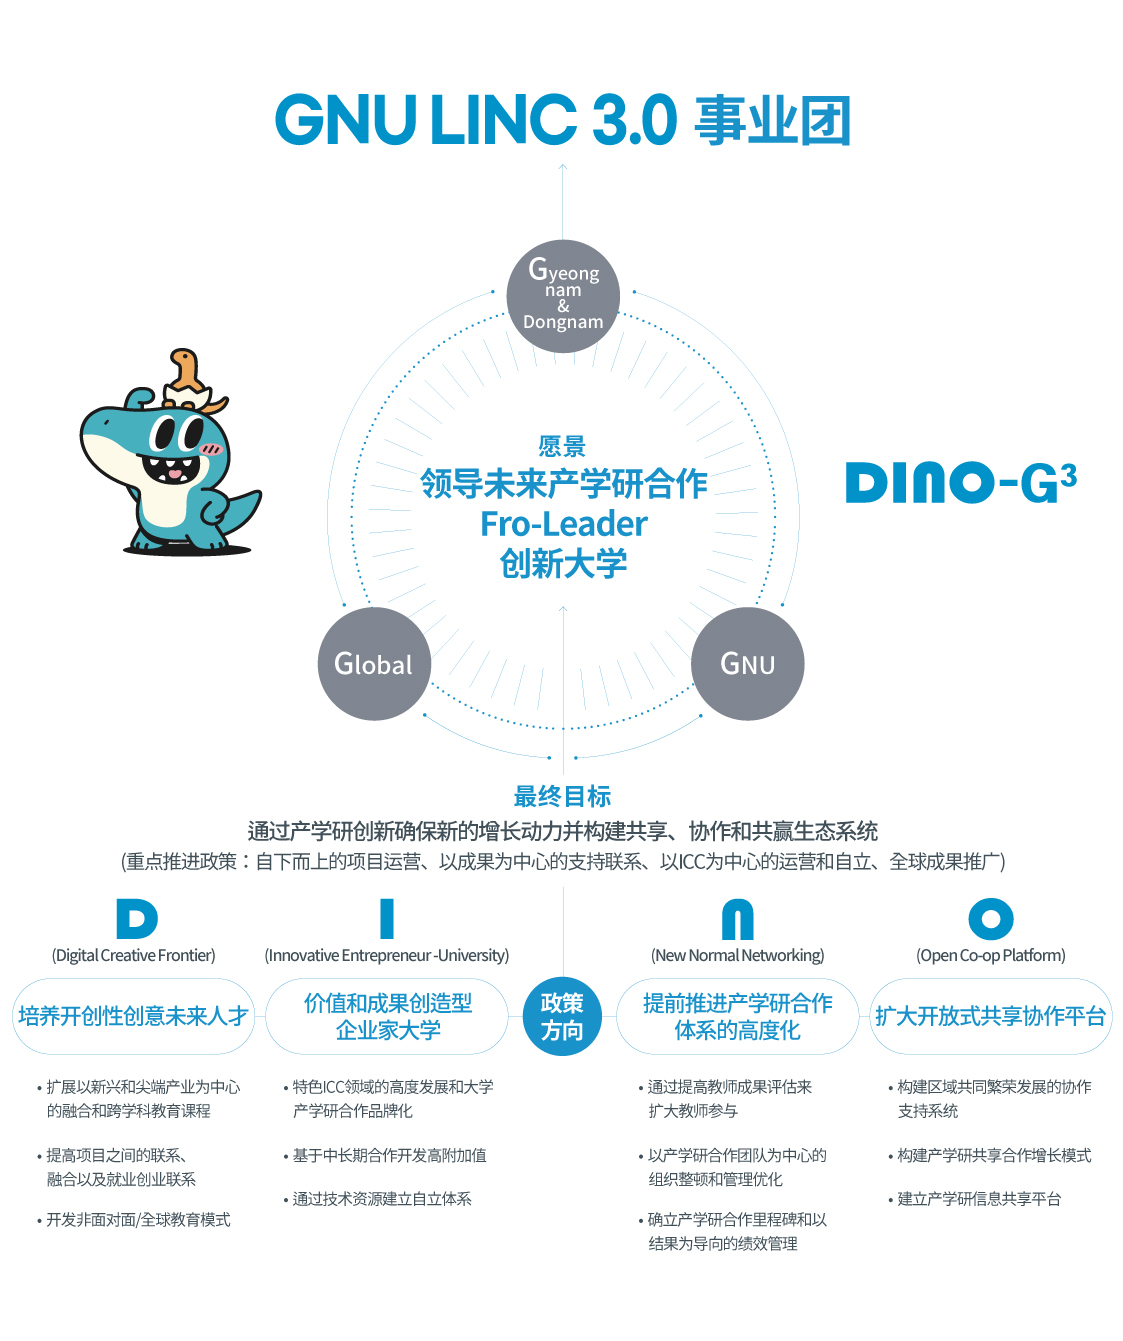 LINC 3.0 事业团, 愿景: 领导未来产学研合作Fro-Leader创新大学